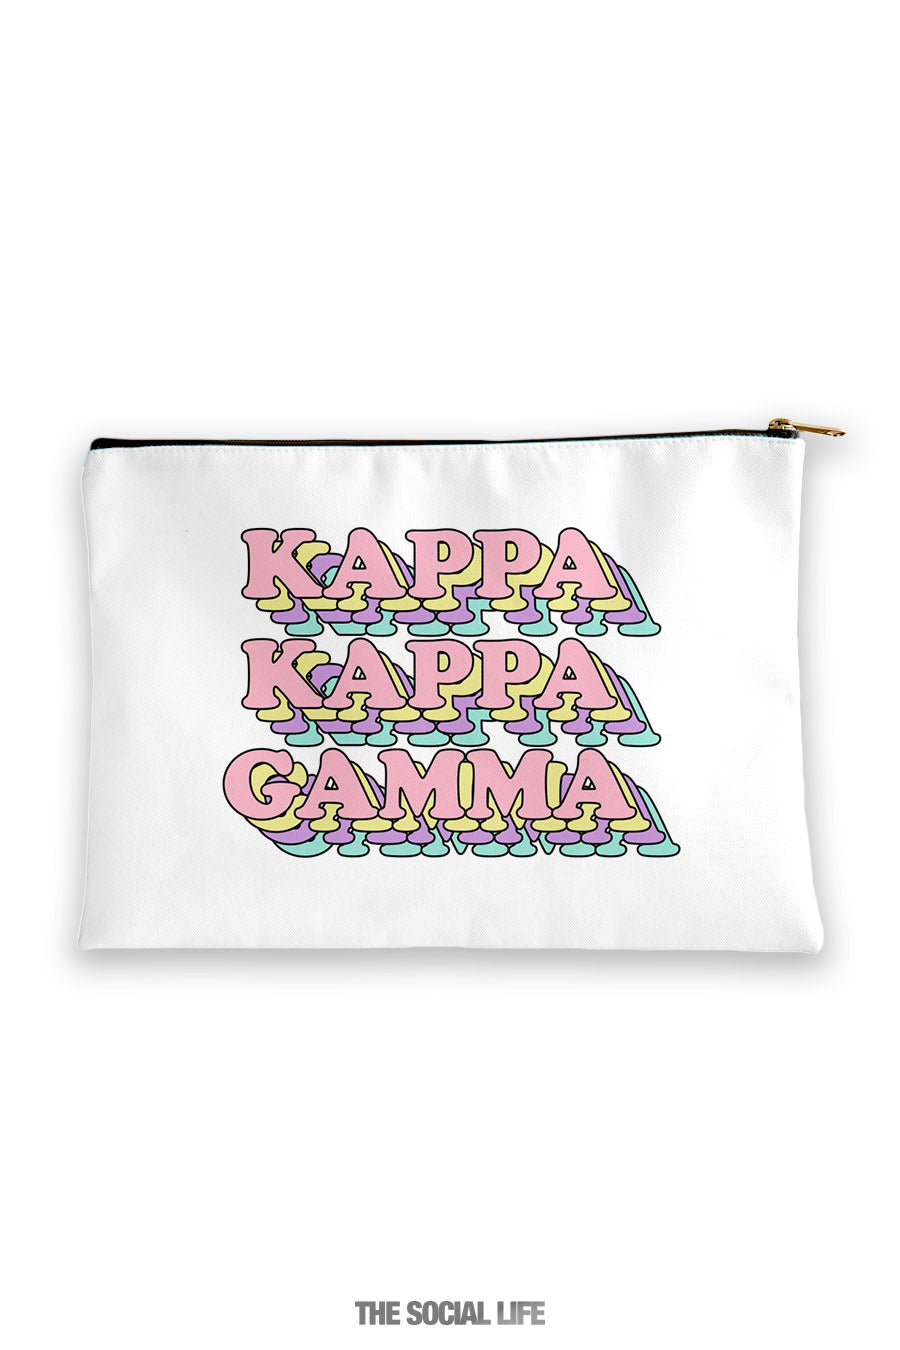 Spytte ud Ørken Baglæns Kappa Kappa Gamma Retro Cosmetic Bag – The Social Life